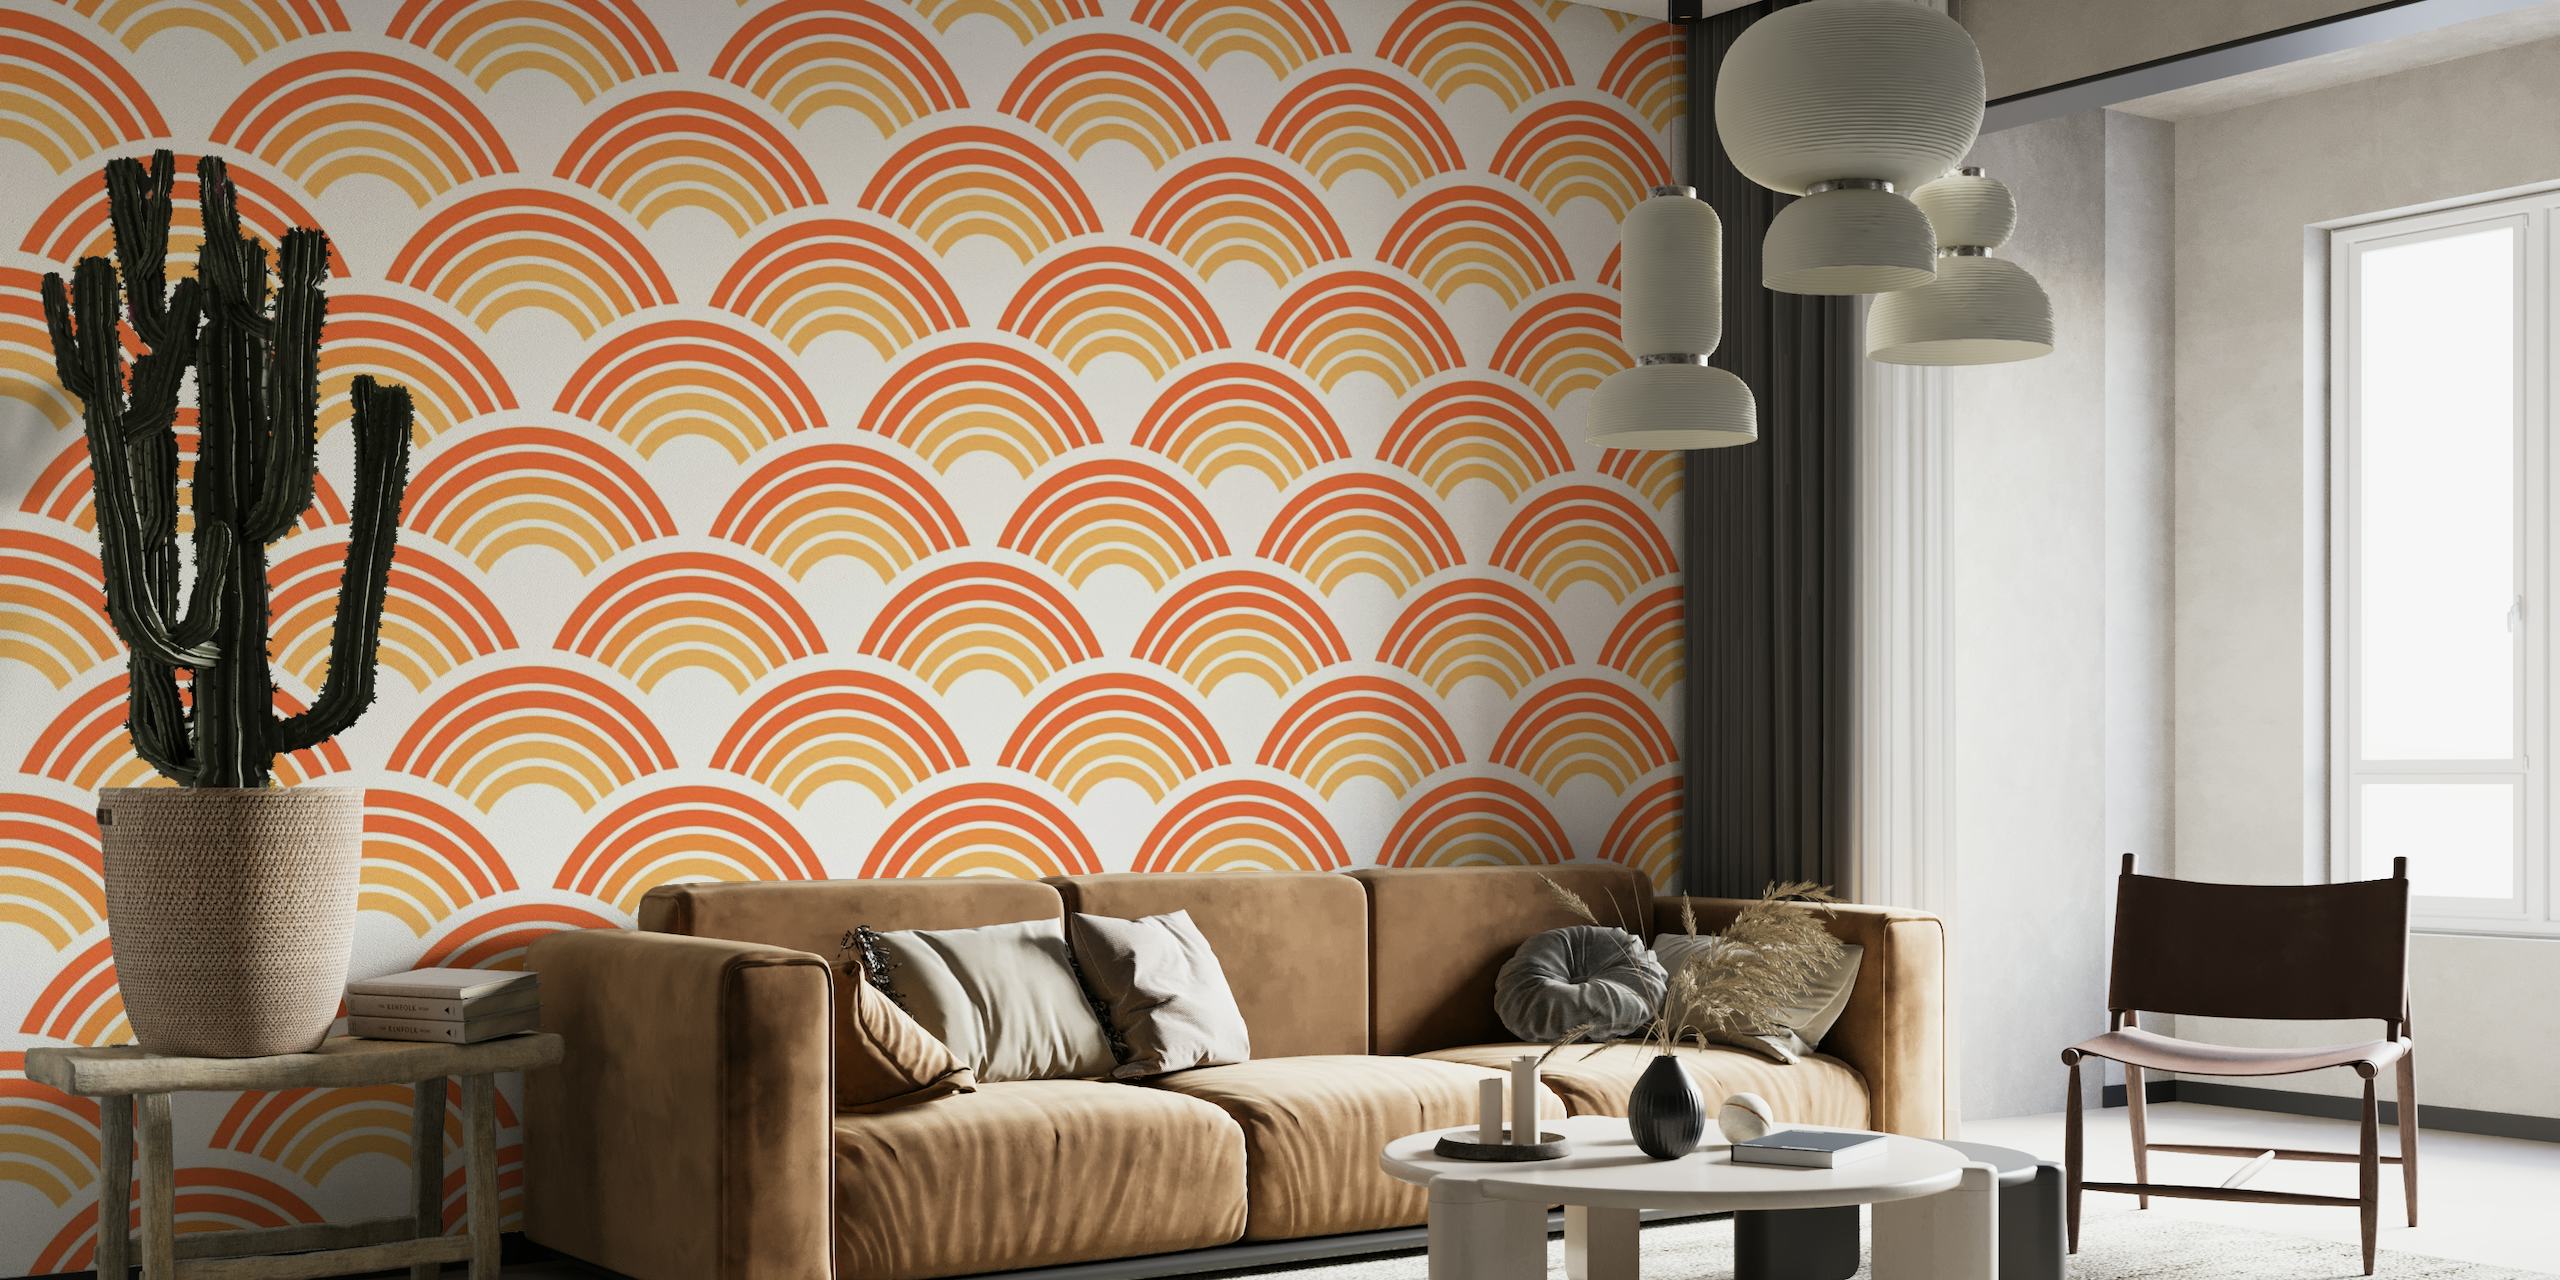 Wall mural with orange rainbow arcs pattern